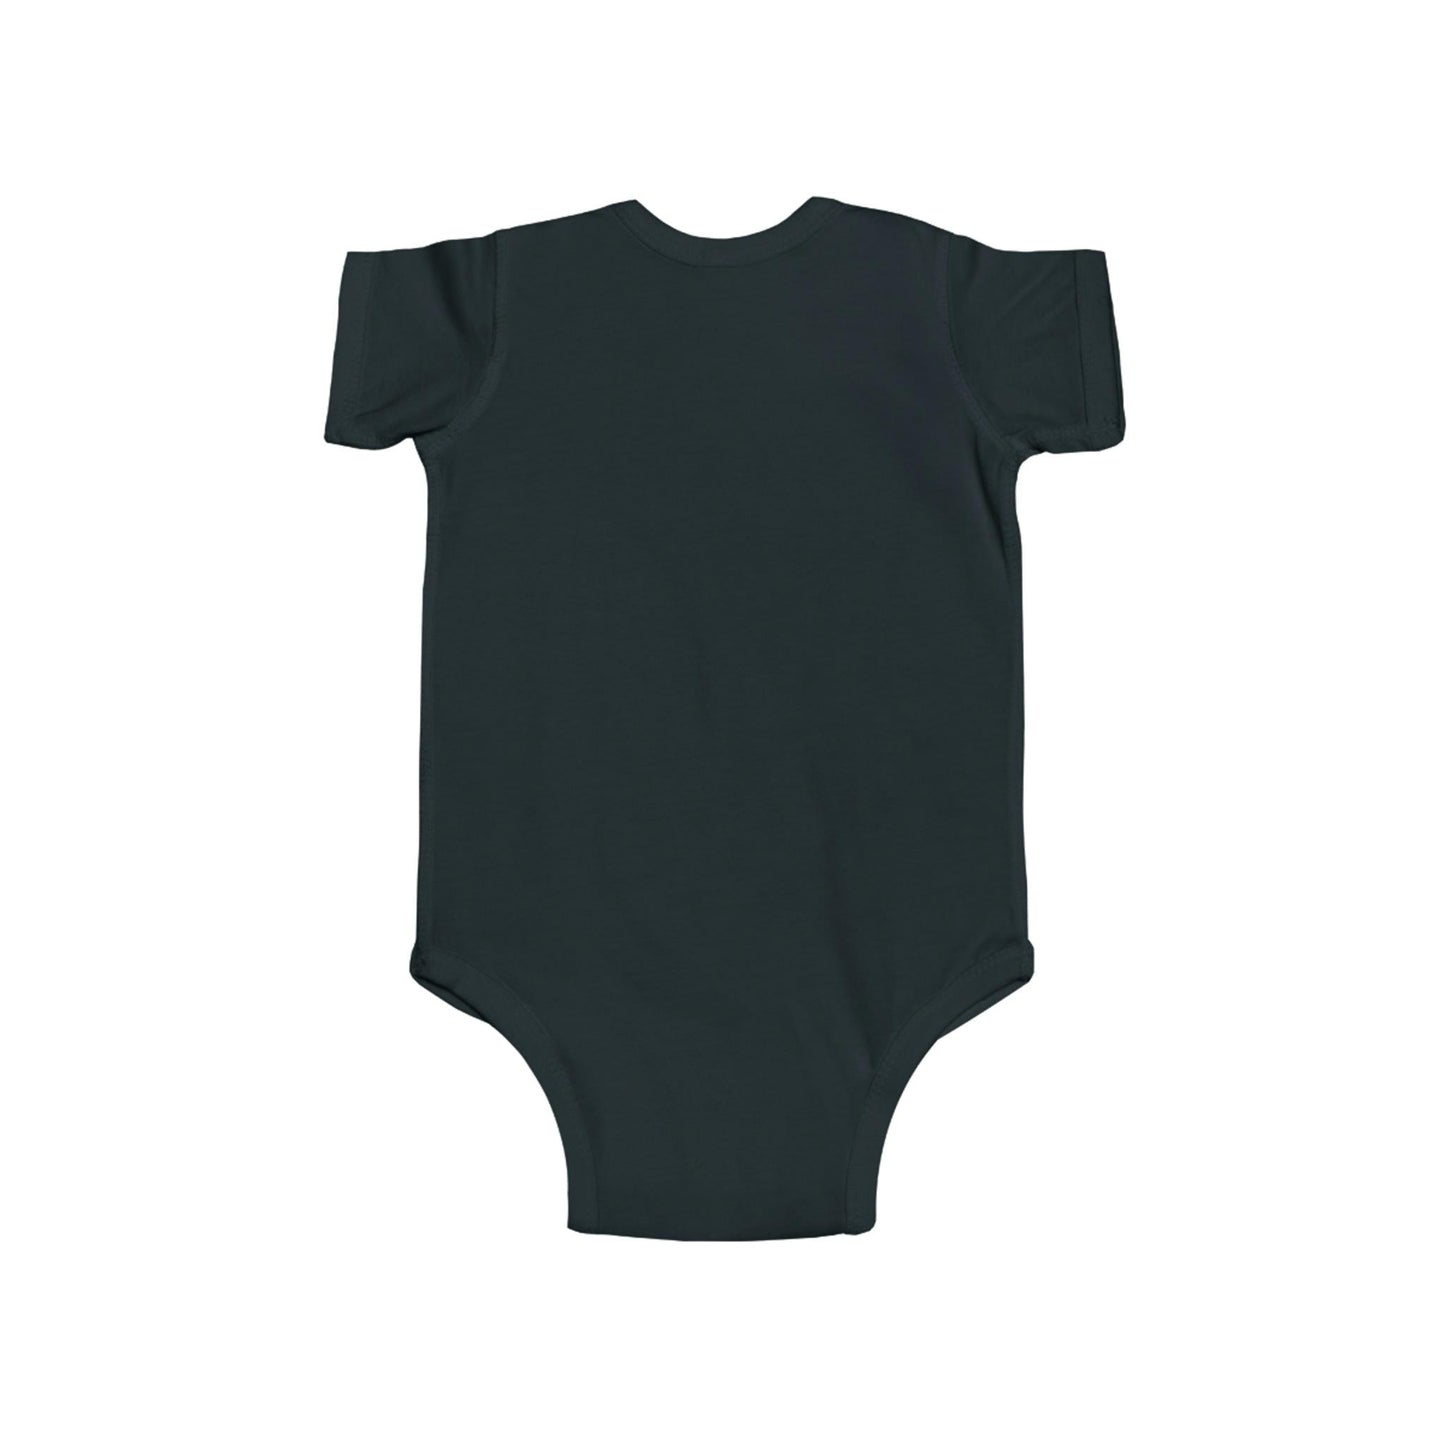 Infant Valentine Bodysuit - Baby clothes